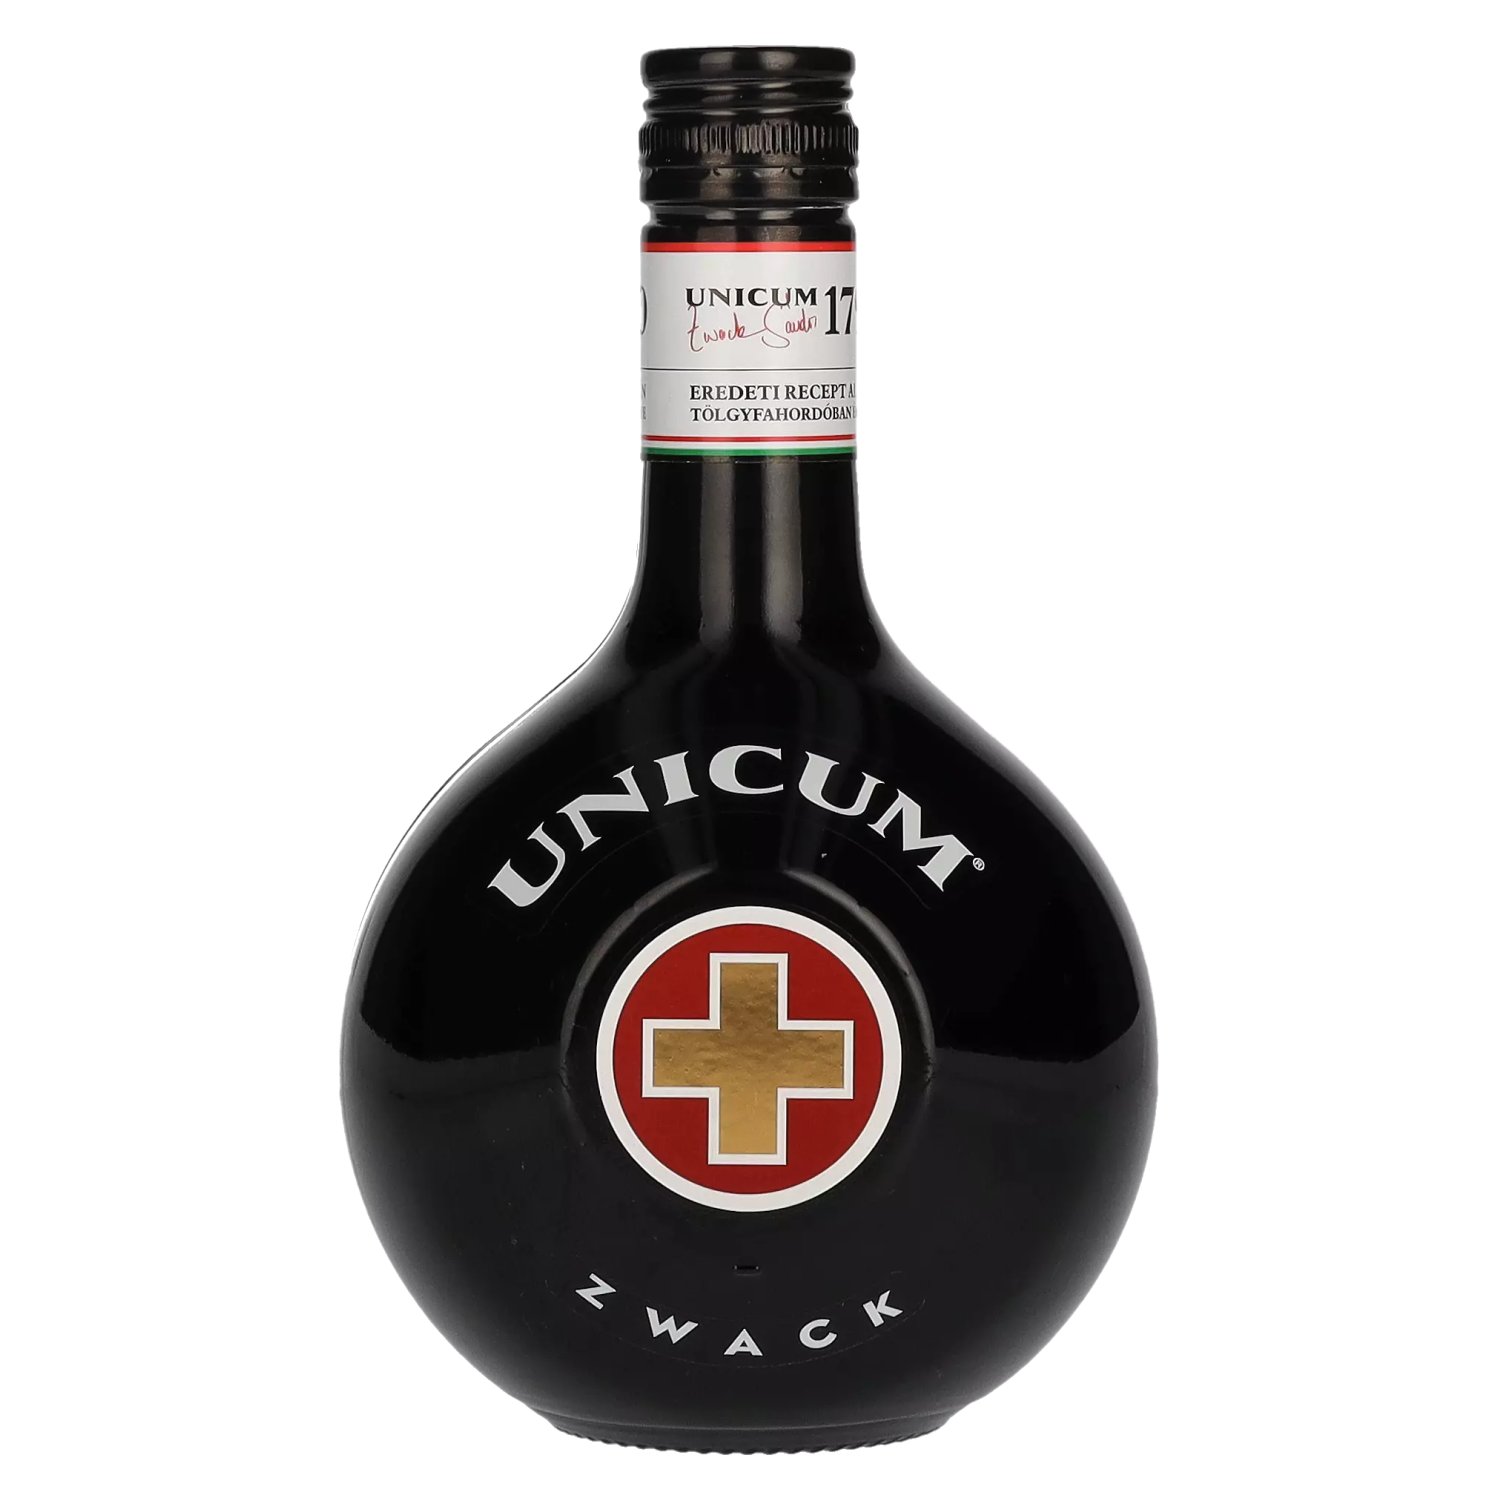 40% 0,7l delicando Unicum Vol. - Zwack